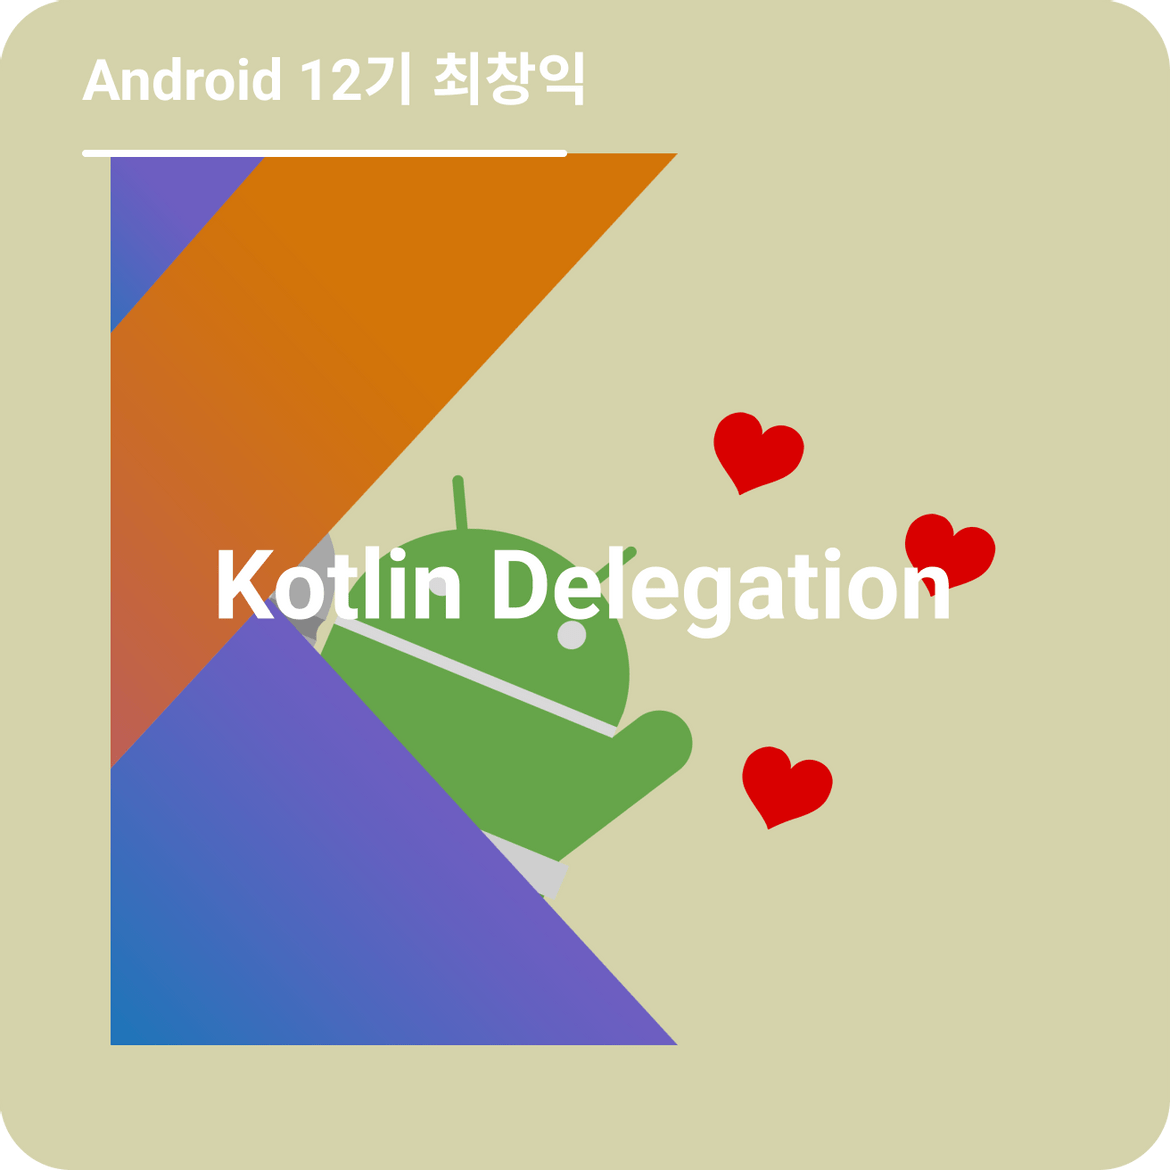 Kotlin Delegation 분석